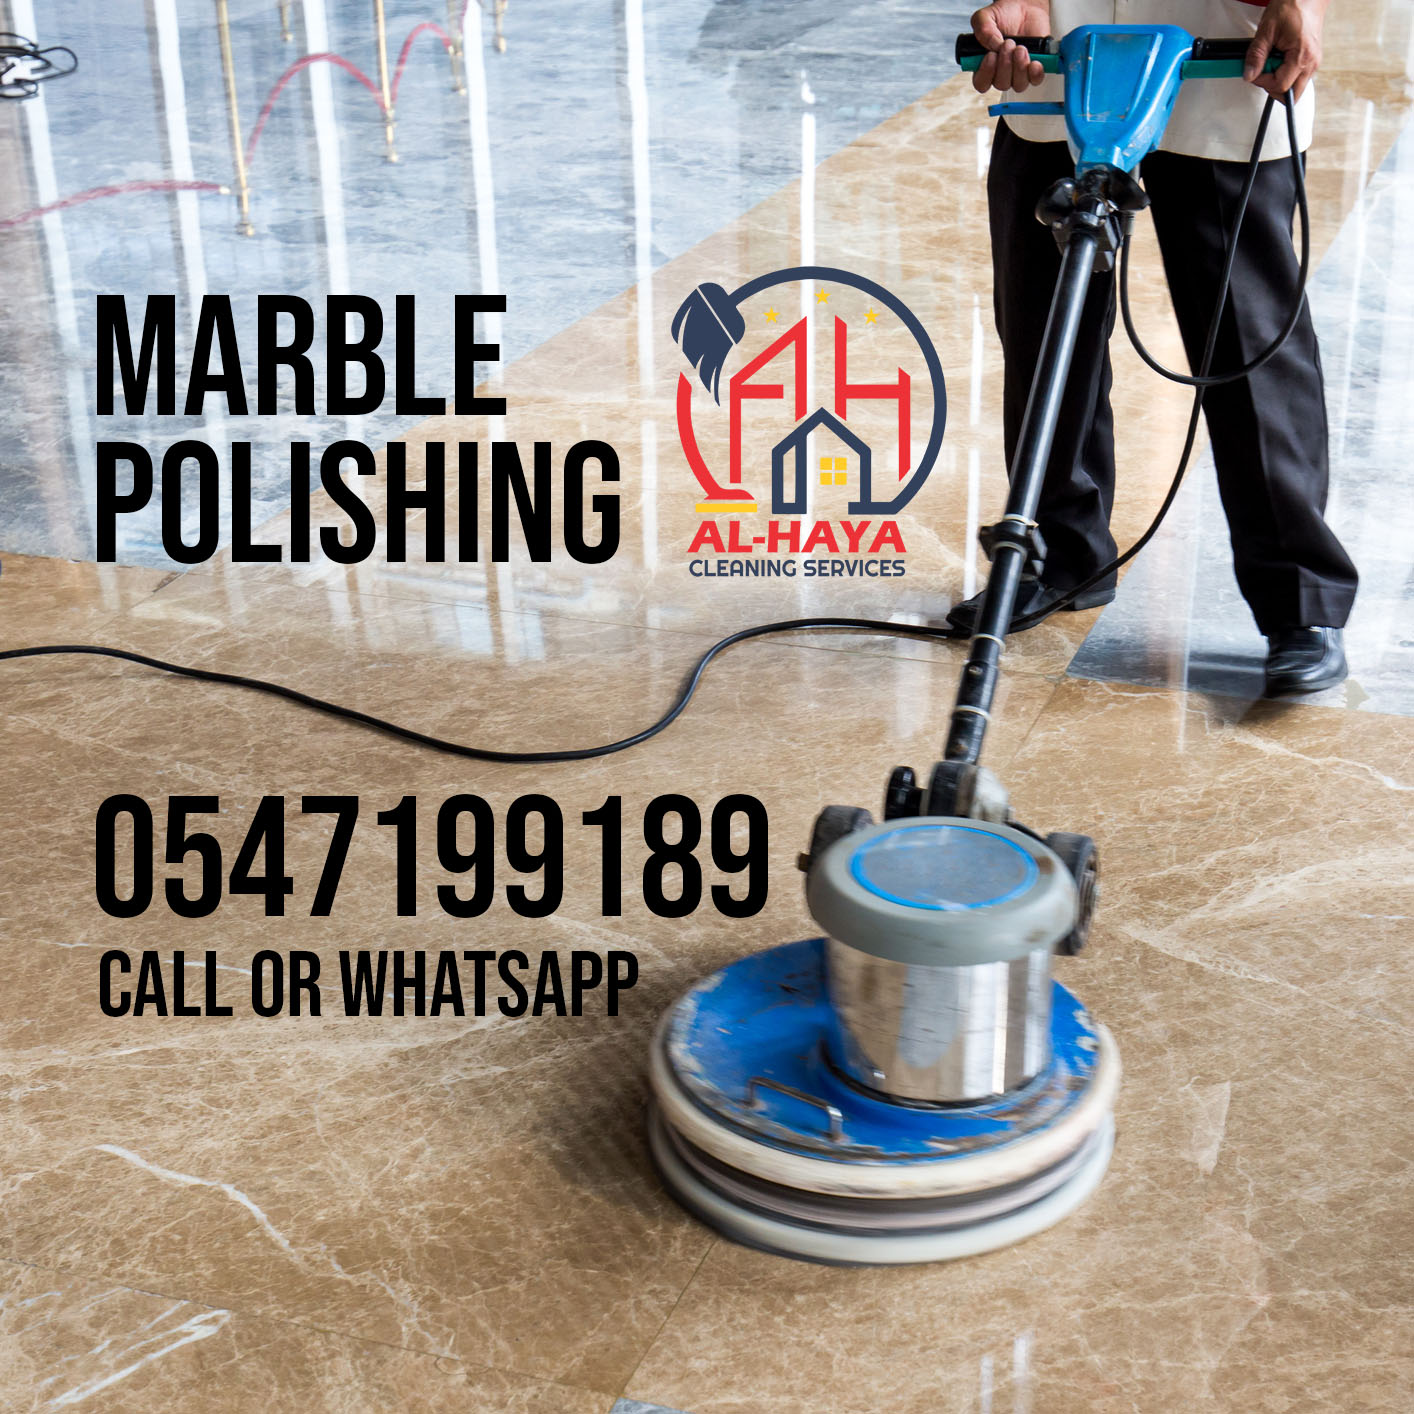 Marble Polishing Restoration 0547199189 in Dubai